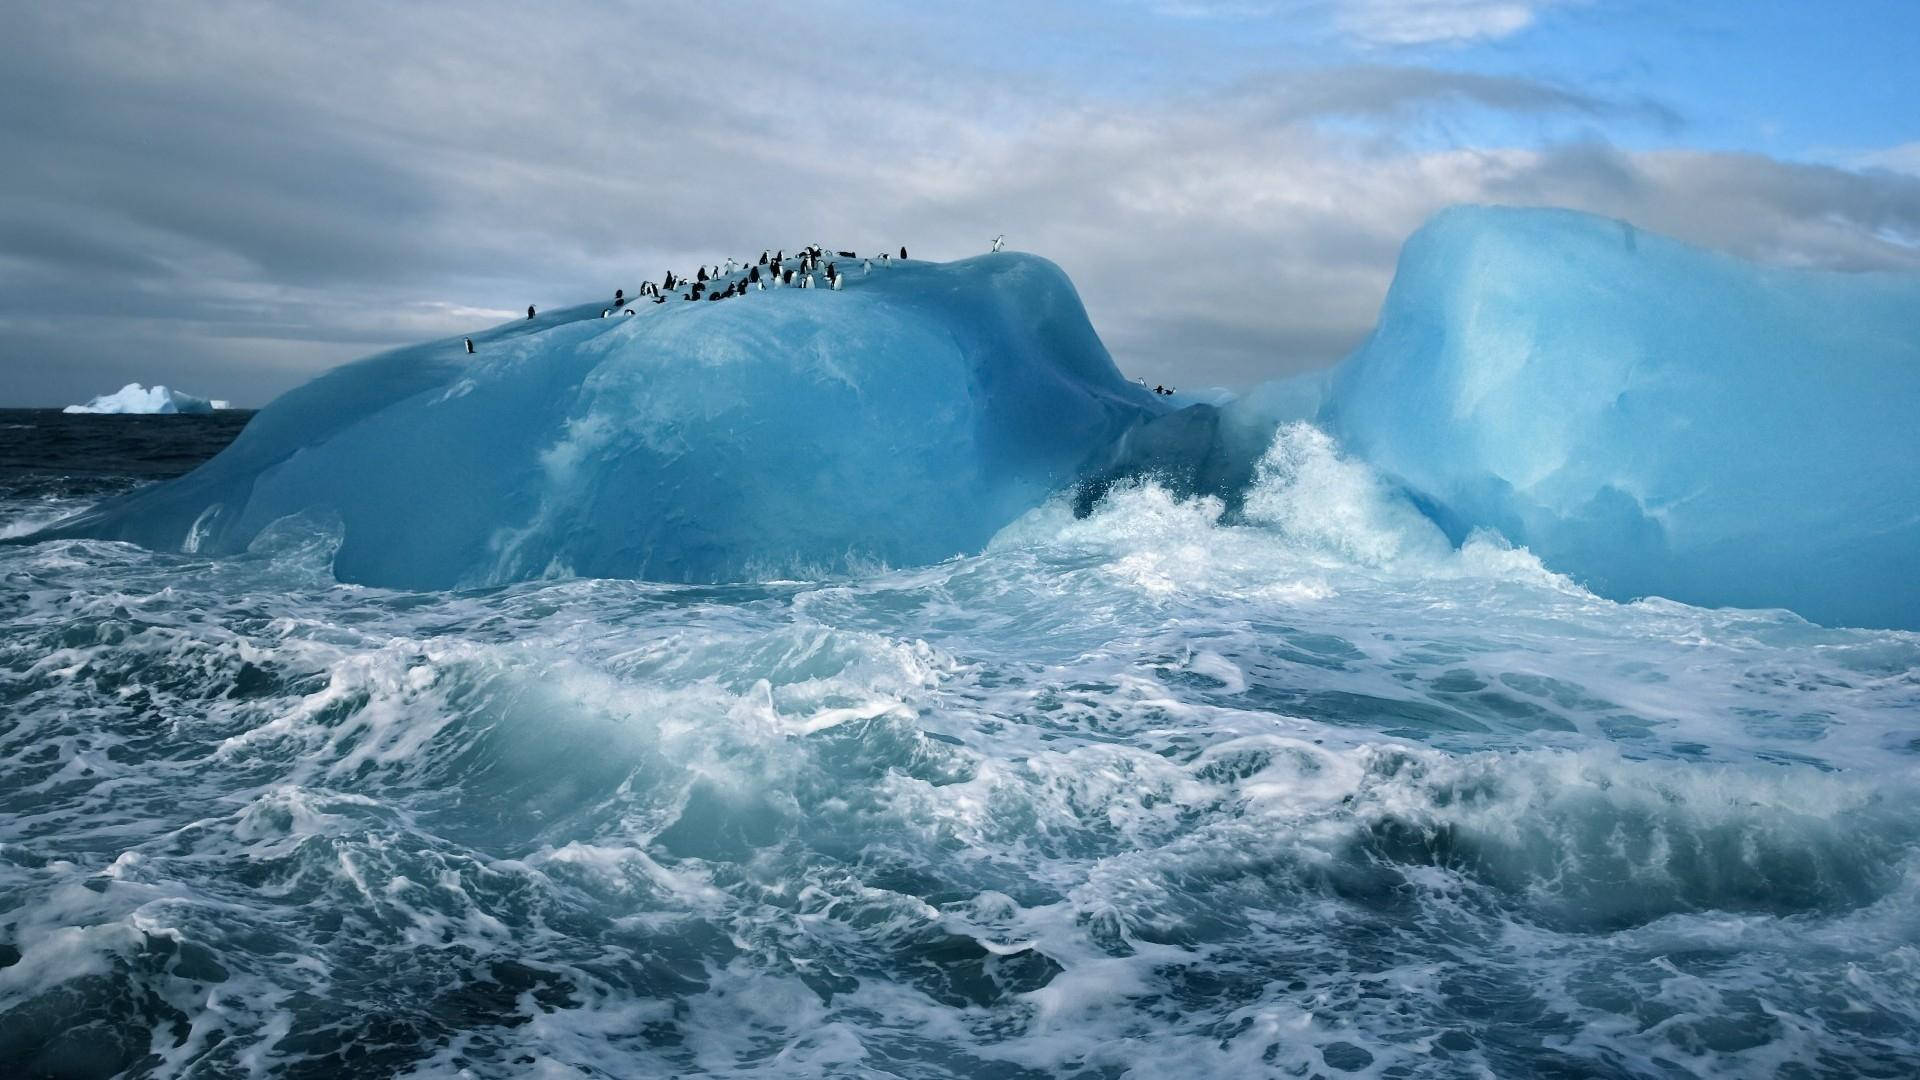 Arctic Iceberg With Penguins Background